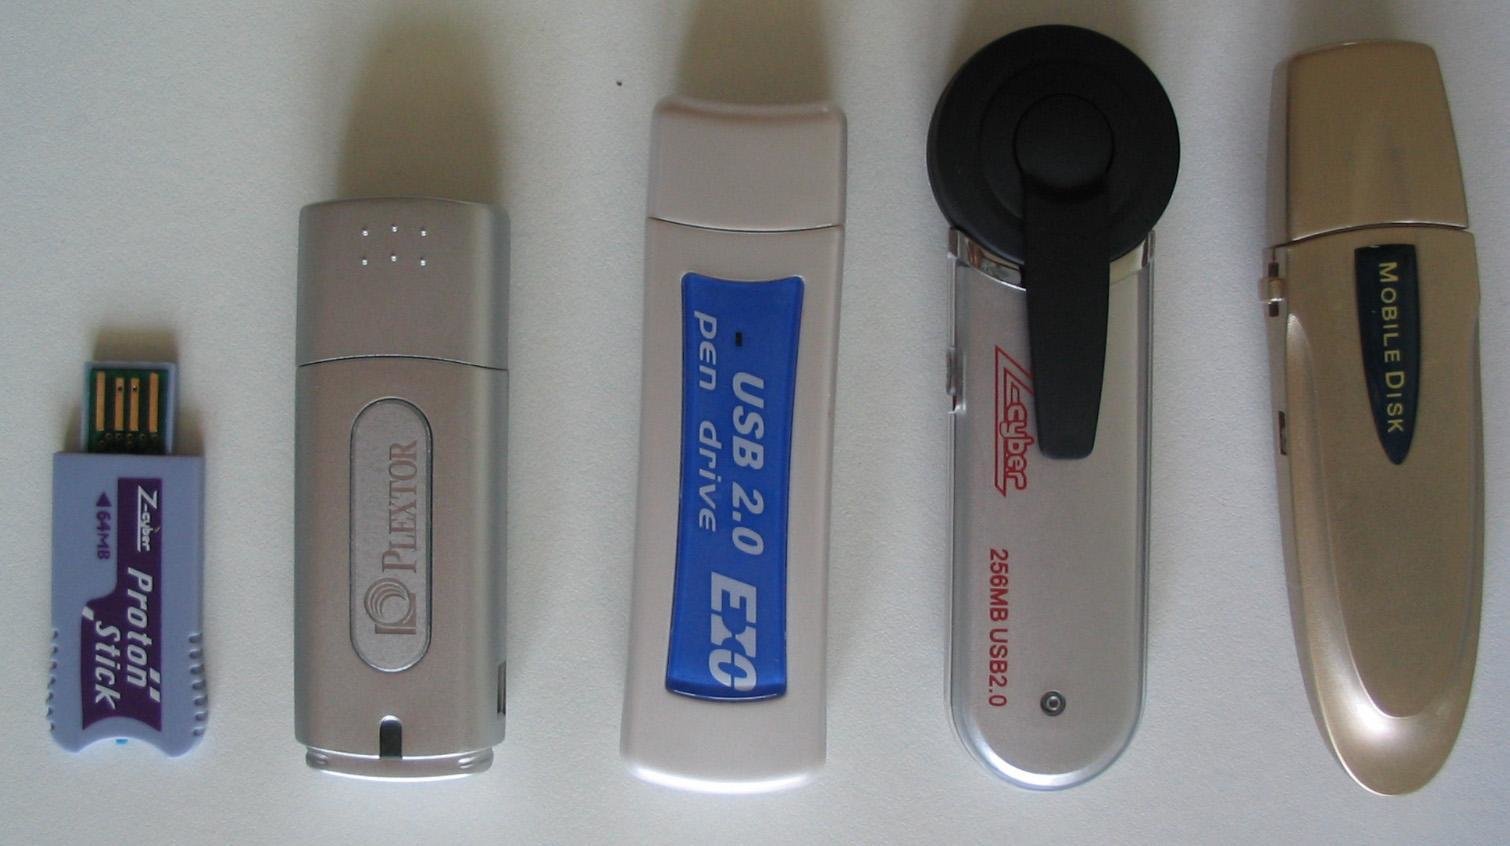 v.l. n.r.: Z-Cyber Proton Stick, Plextor Plexflash PX-F512, InnoVISION EIO USB 2.0 Pen Drive, Z-Cyber Cool Disk 2.0 V2, TwinMOS USB 2.0 Mobile Disk